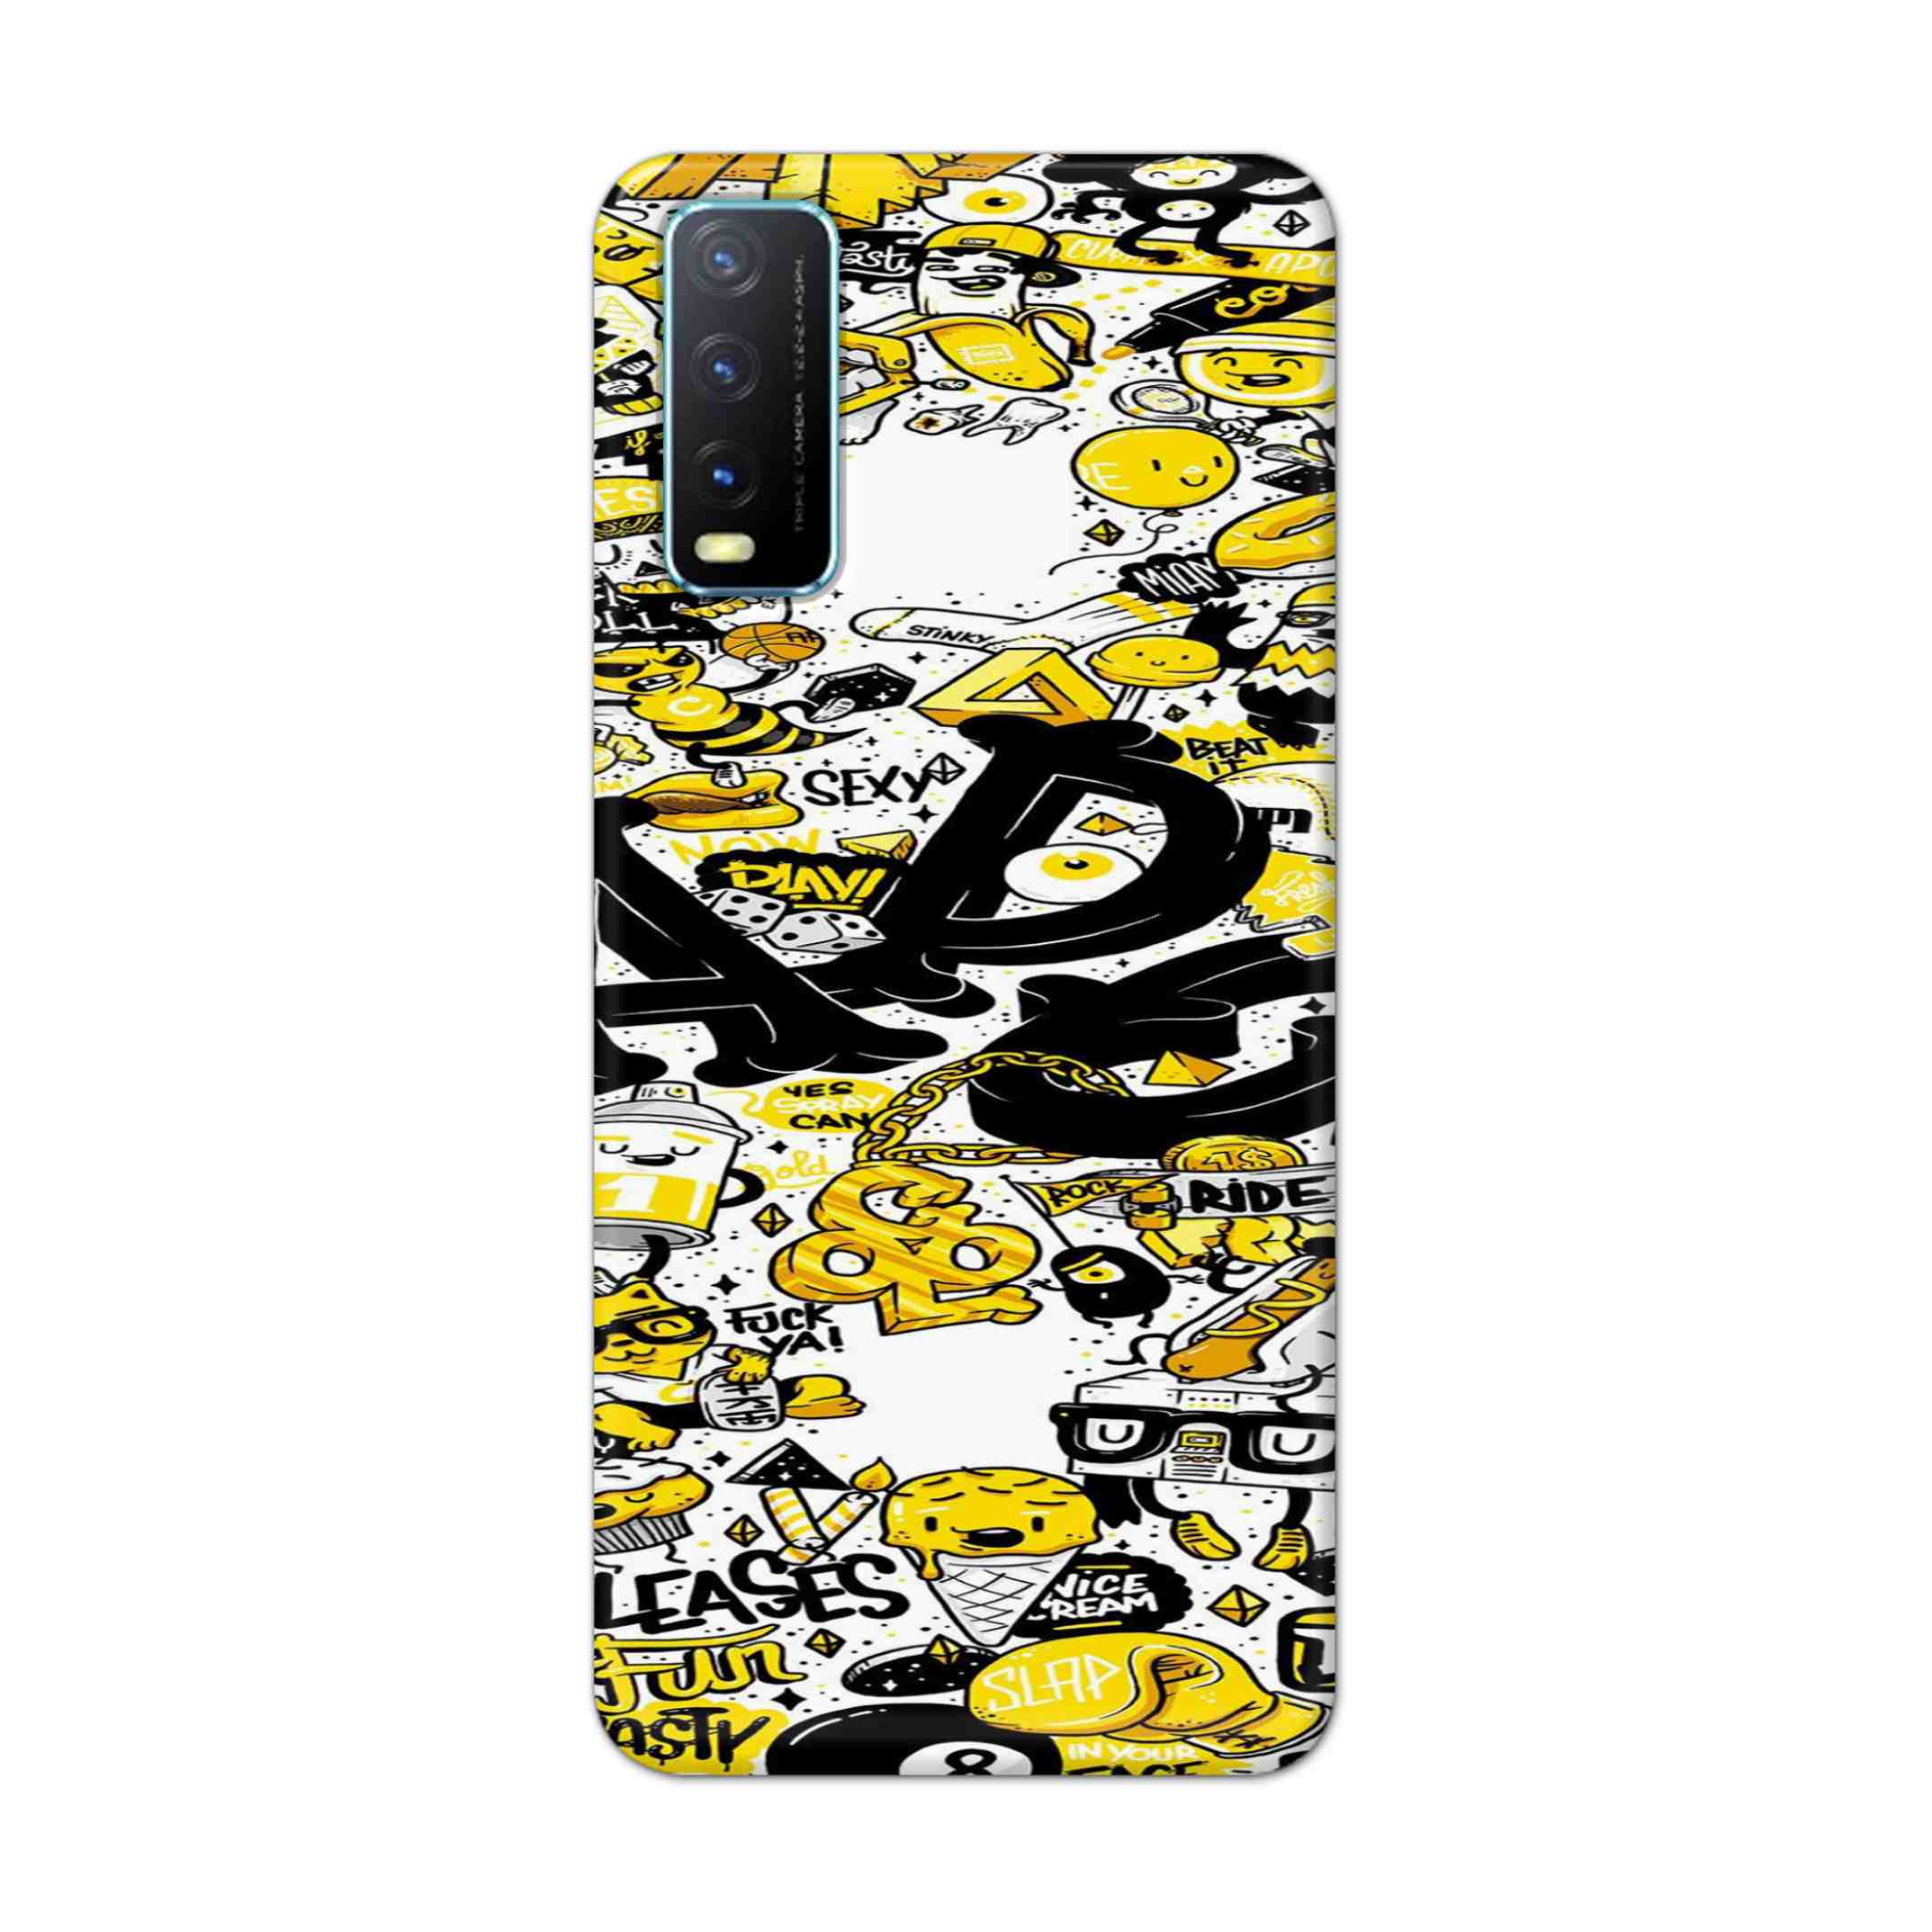 Buy Ado Hard Back Mobile Phone Case Cover For Vivo Y20 Online